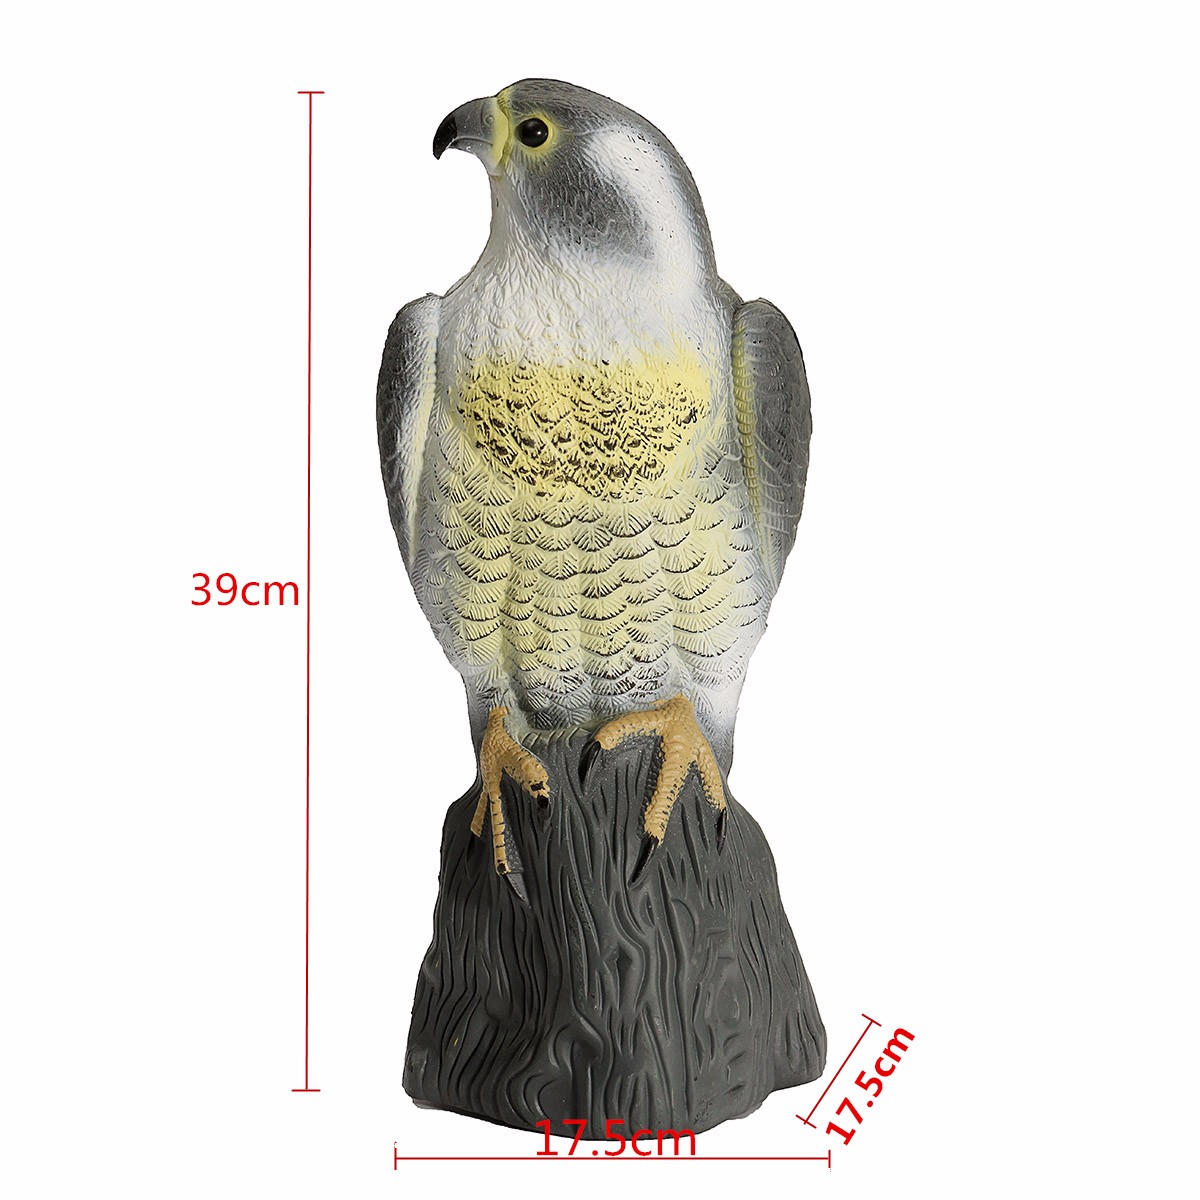 Simulation-Falcon-Hawk-Decoy-Bird-Pigeon-Deterrent-Scarer-Repeller-Garden-Lawn-Decor-Hallowmas-Decor-1084916-3